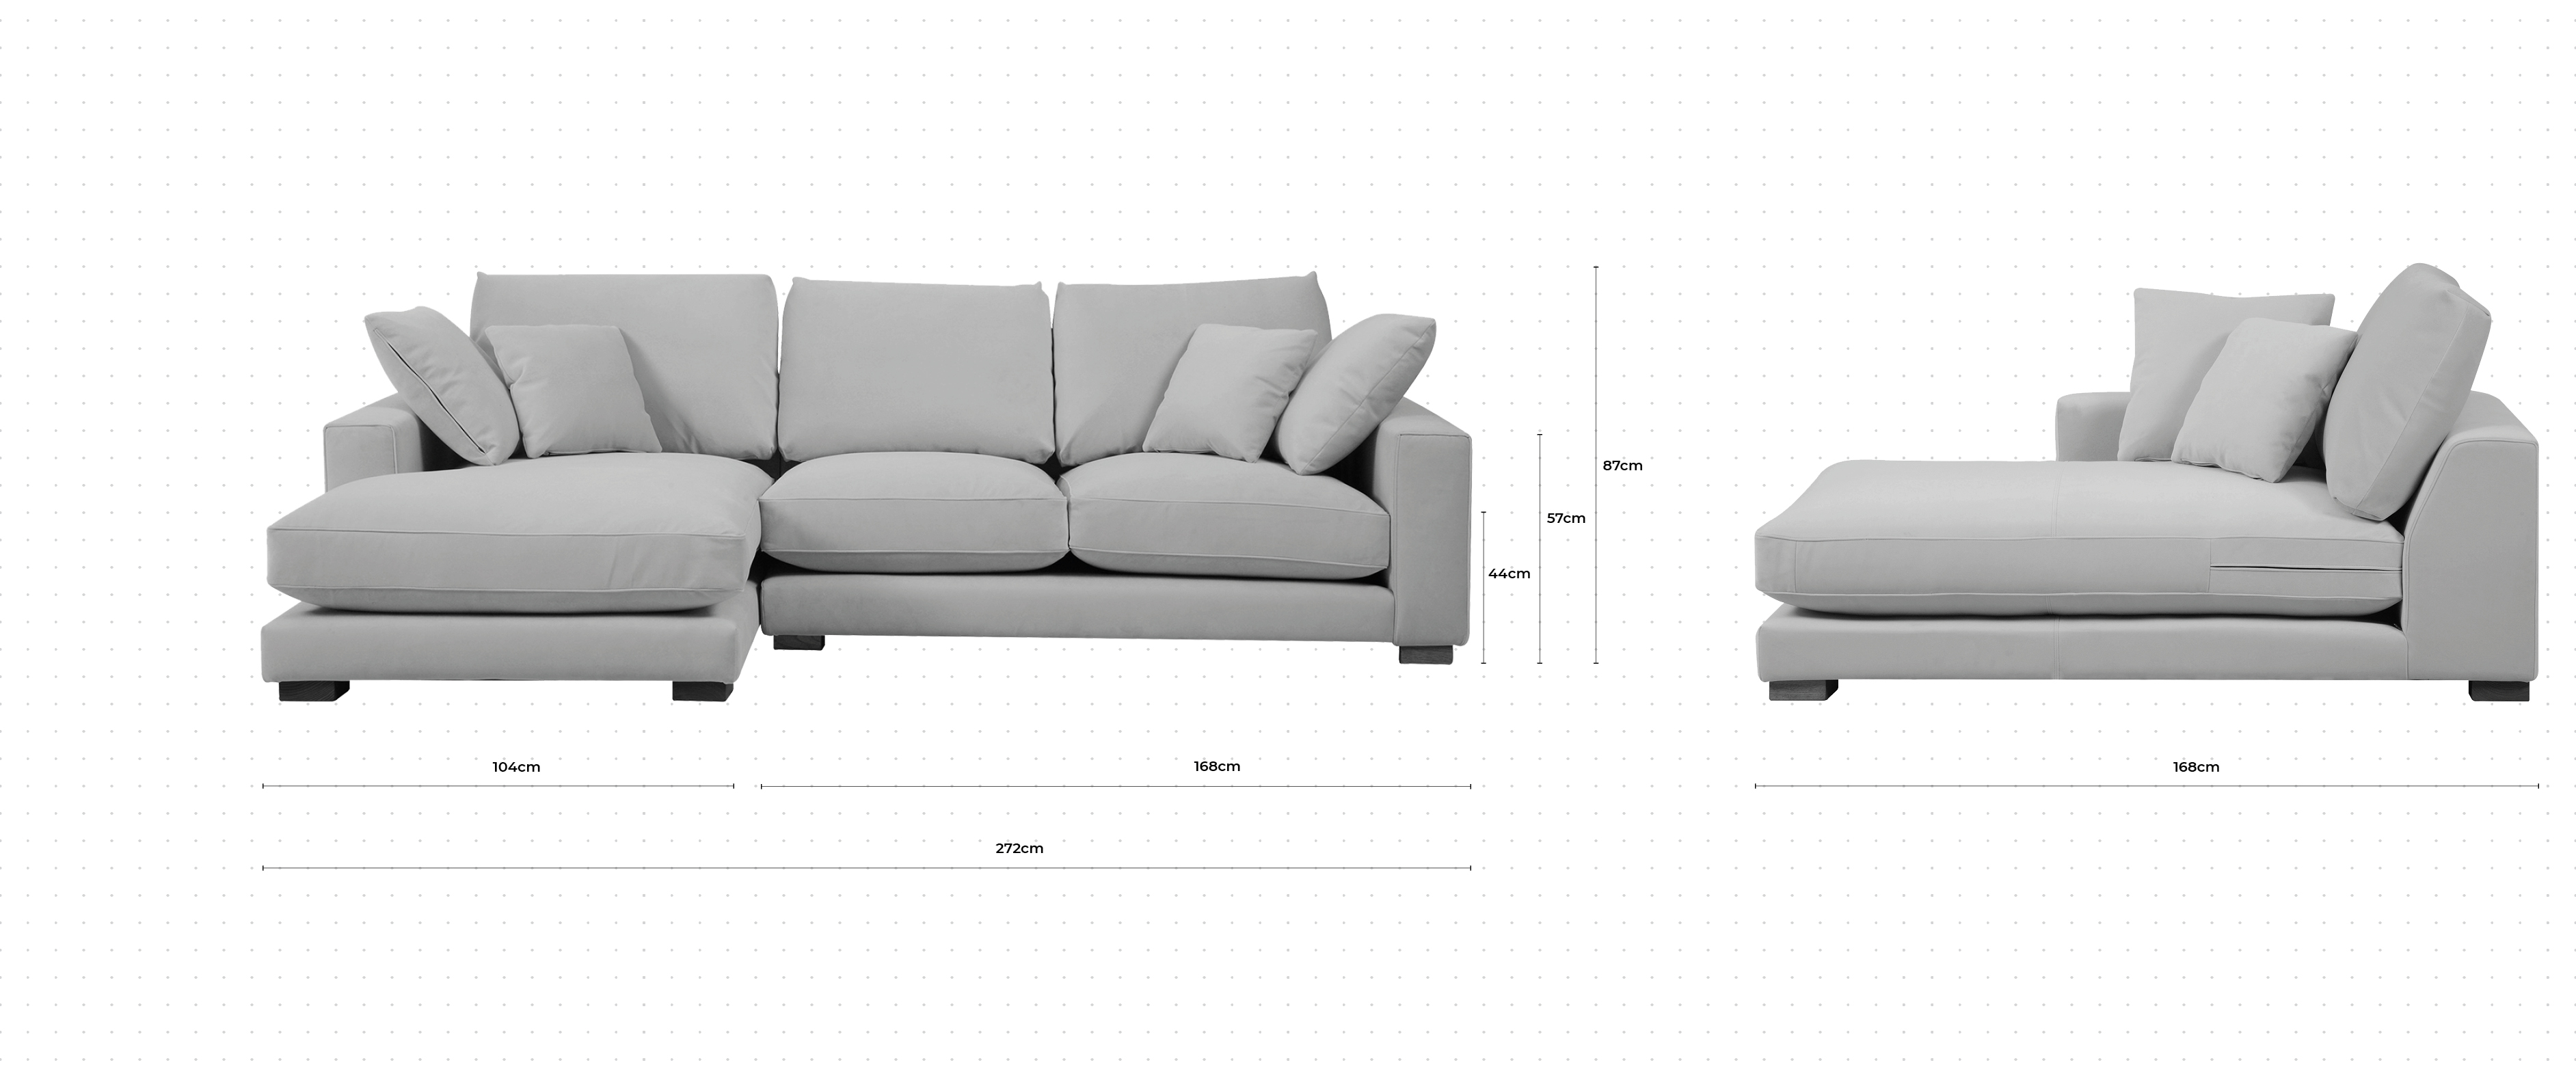 Dillon Large Chaise Sofa LHF dimensions